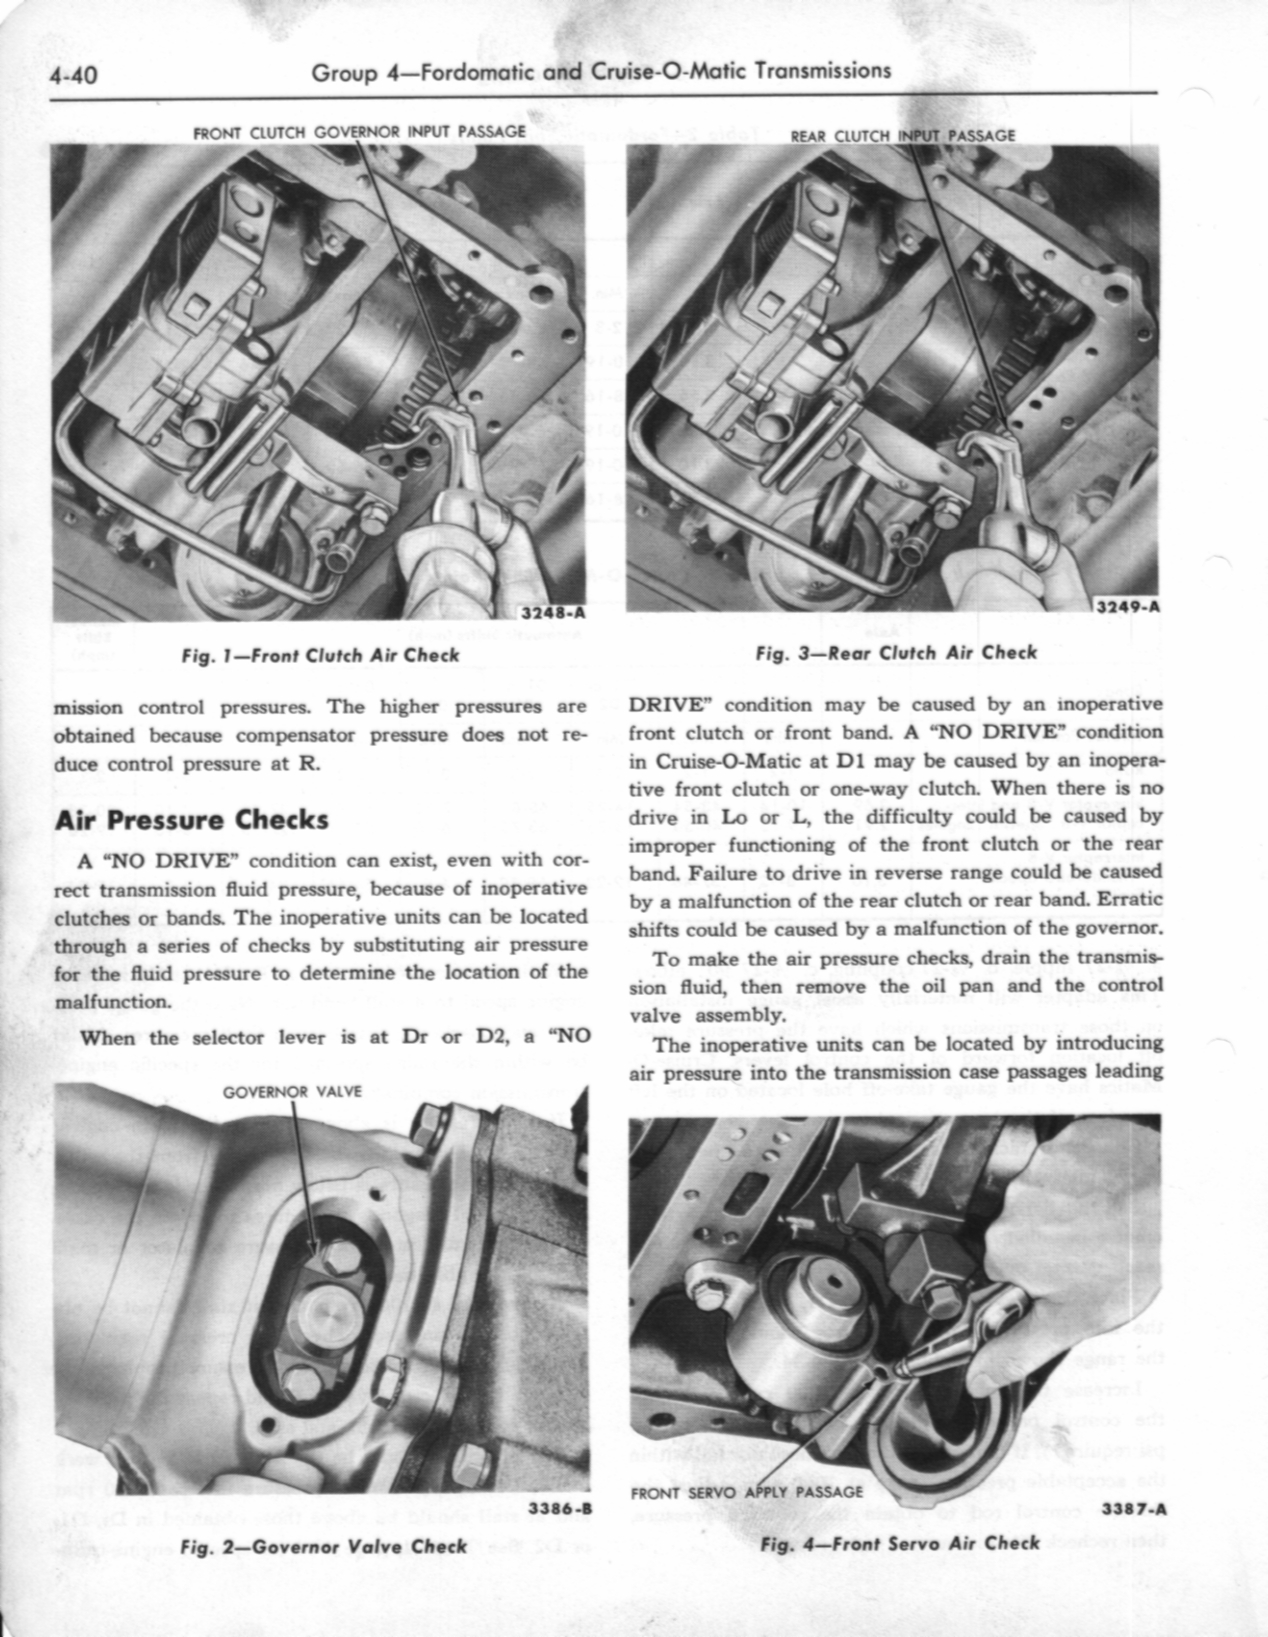 1964 Ford cruise o matic transmission #1